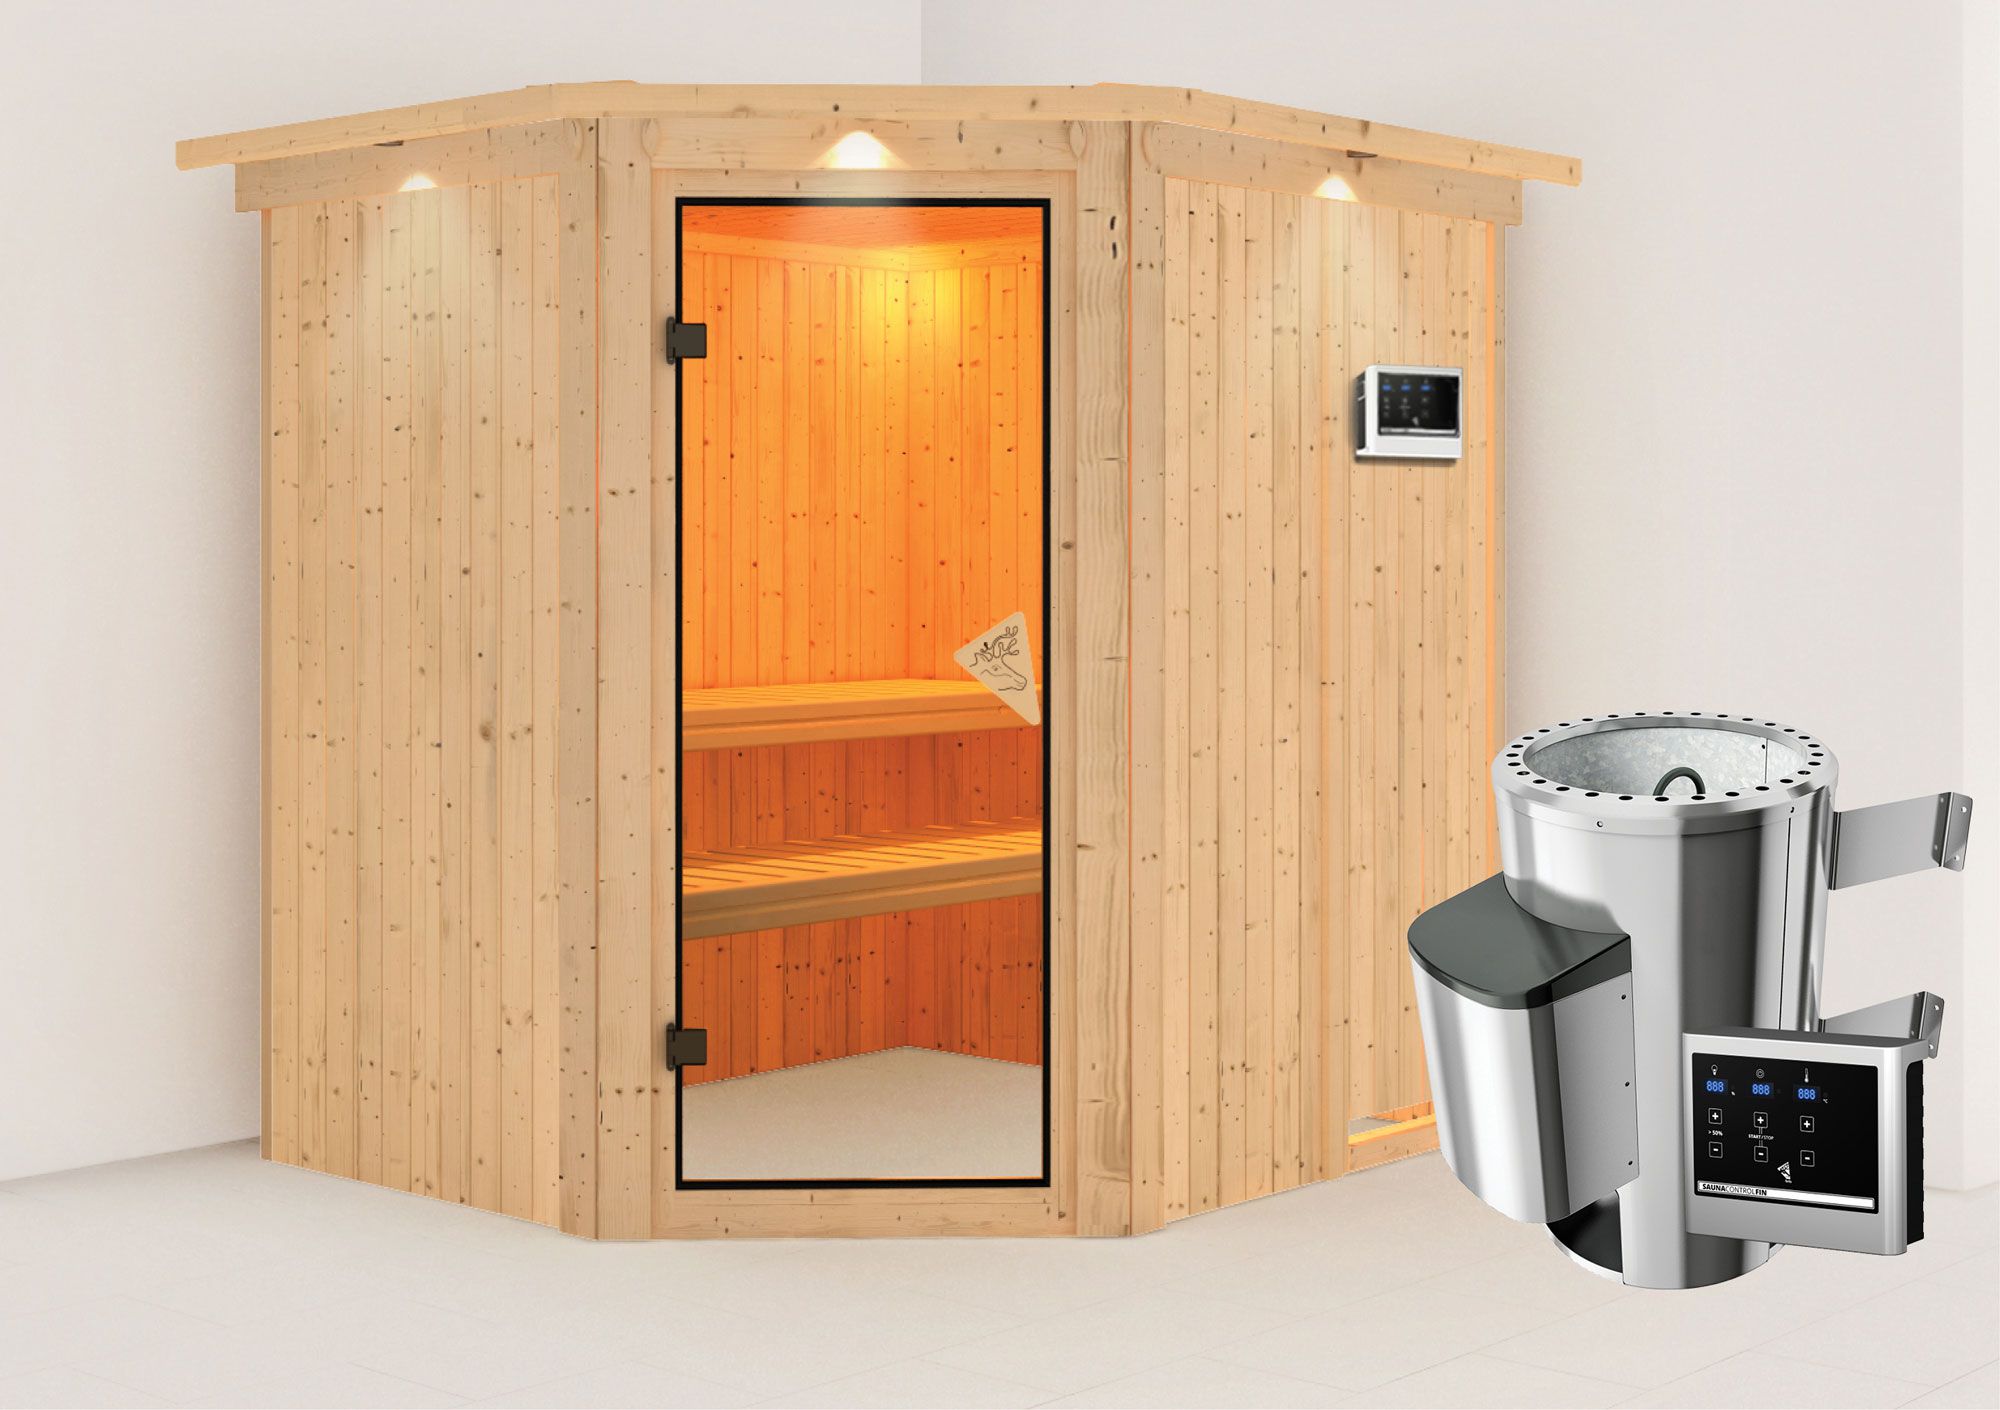 Sauna "Askjell" SET met bronskleurige deur en rand - kleur: naturel, kachel externe regeling eenvoudig 3,6 kW - 210 x 184 x 202 cm (B x D x H)